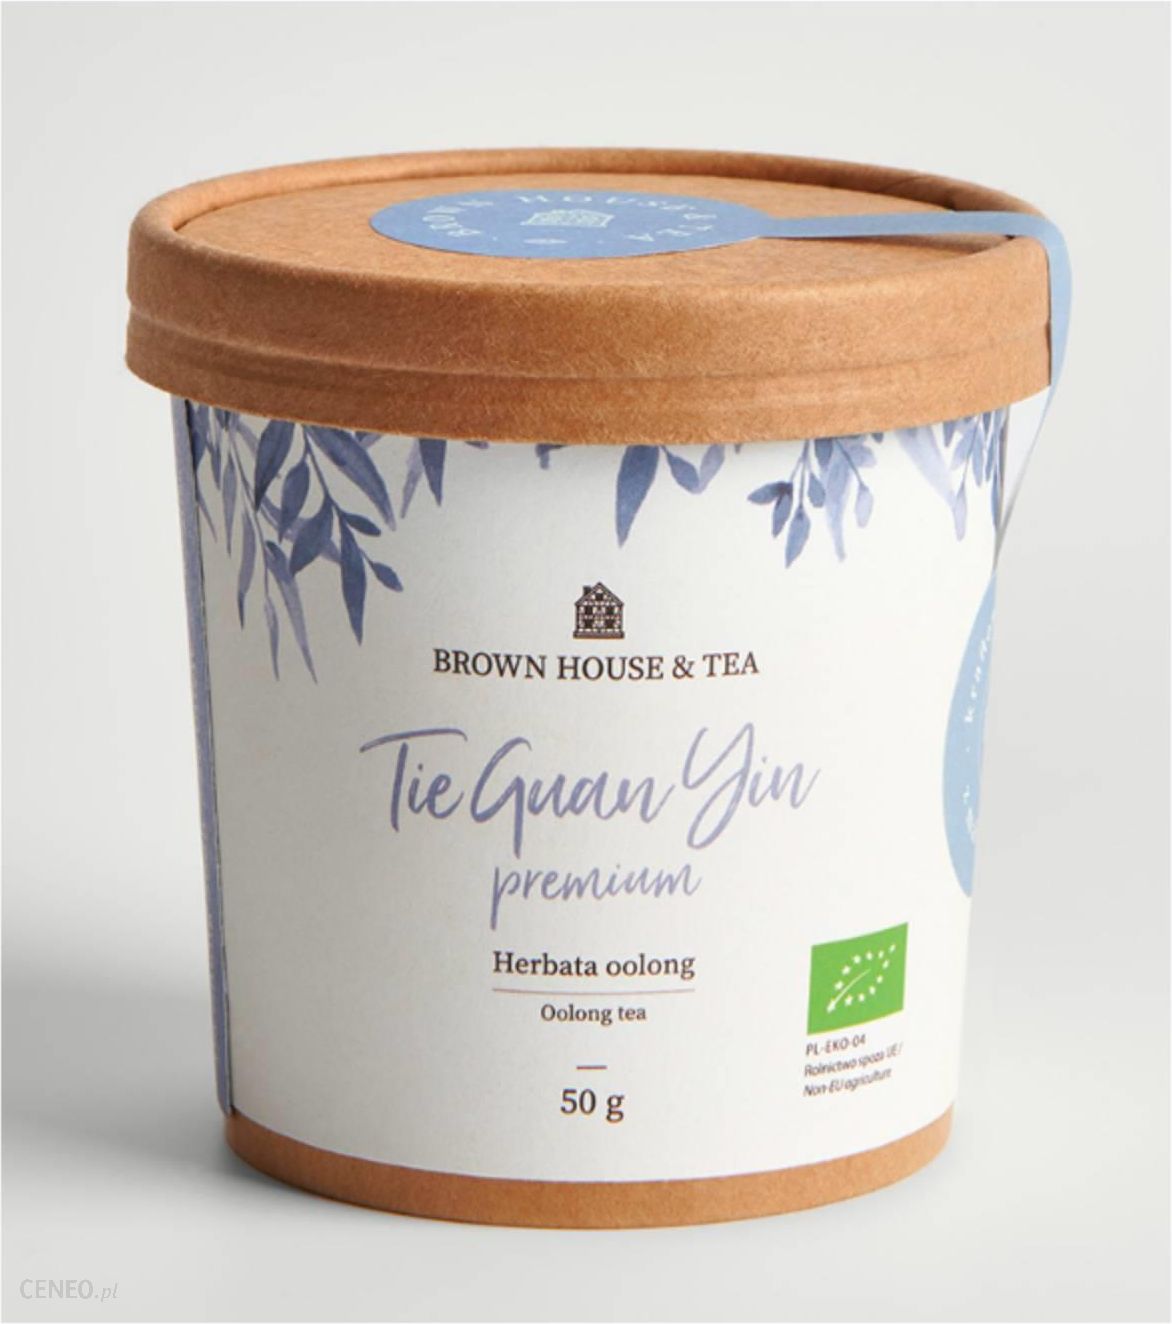 Brown Houseandtea House And Tea Herbata Oolong Tie Guan Yin 50g